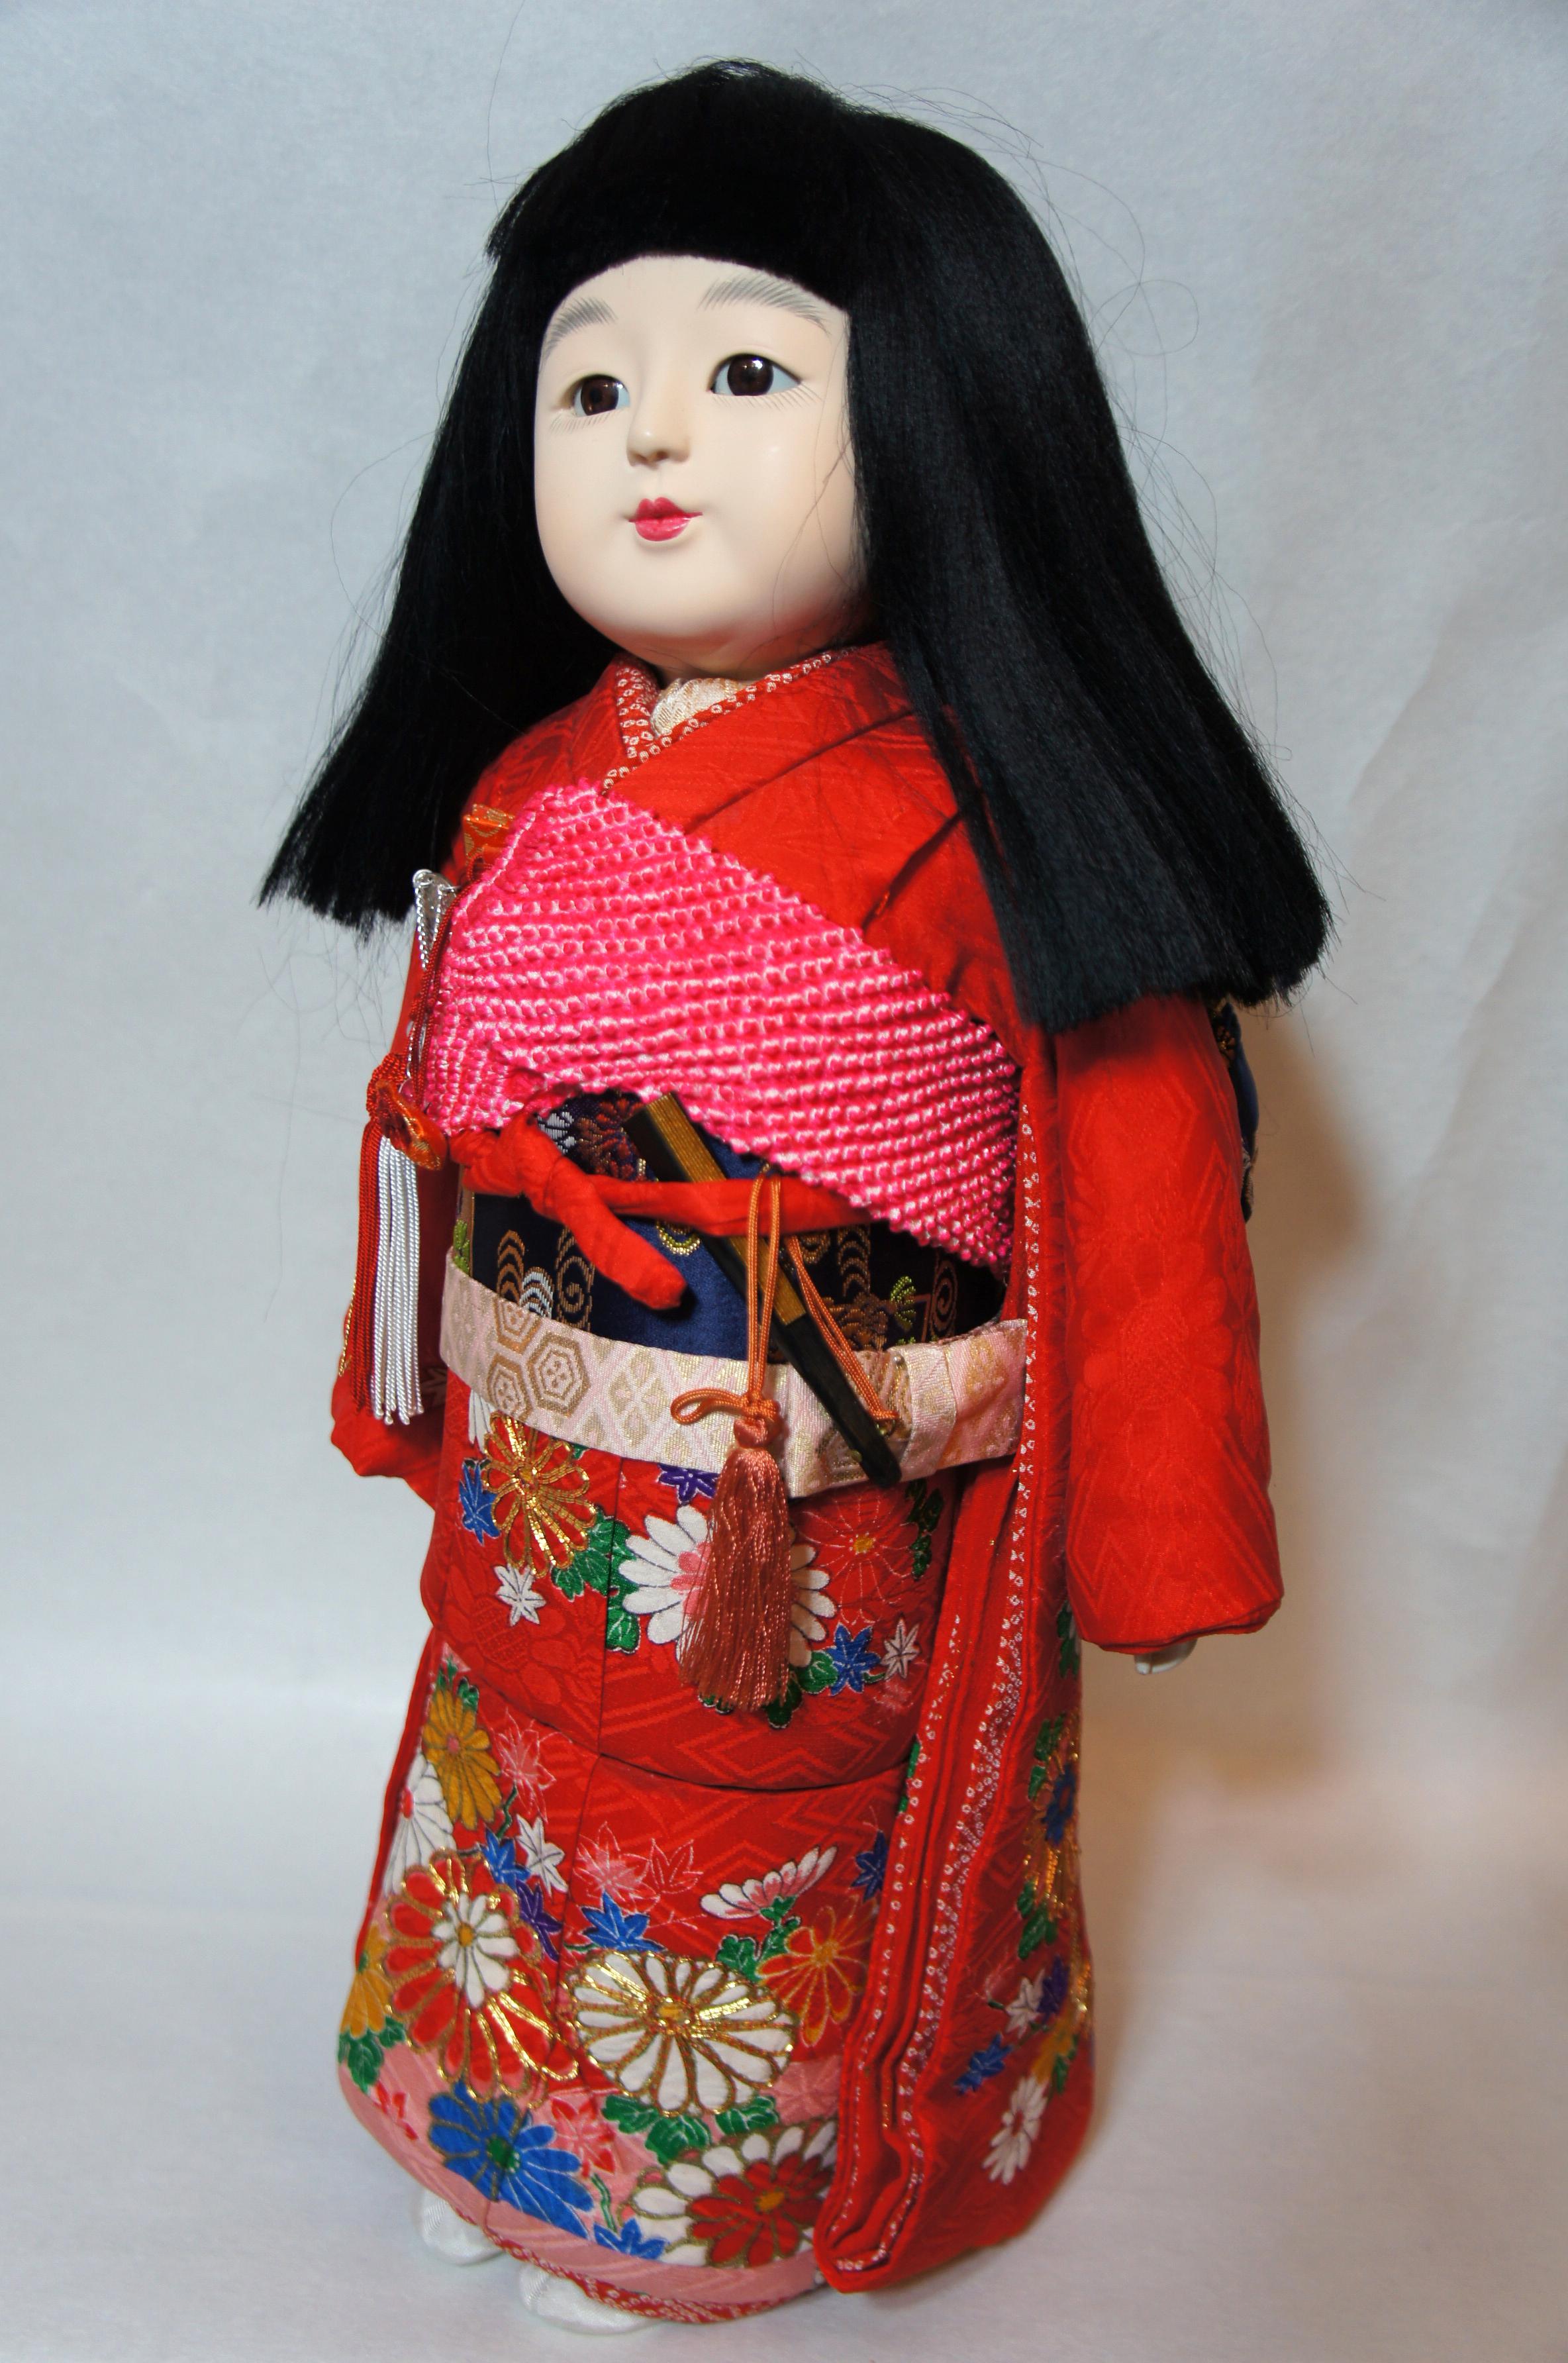 Beautiful Japanese traditional kimekomi ichimatsu girl doll.
The doll wear the beautiful kimono, haori and obi that were made of silk with decorative pattern.
This doll's body was made of wood, and face was made of plaster by hand. The face was